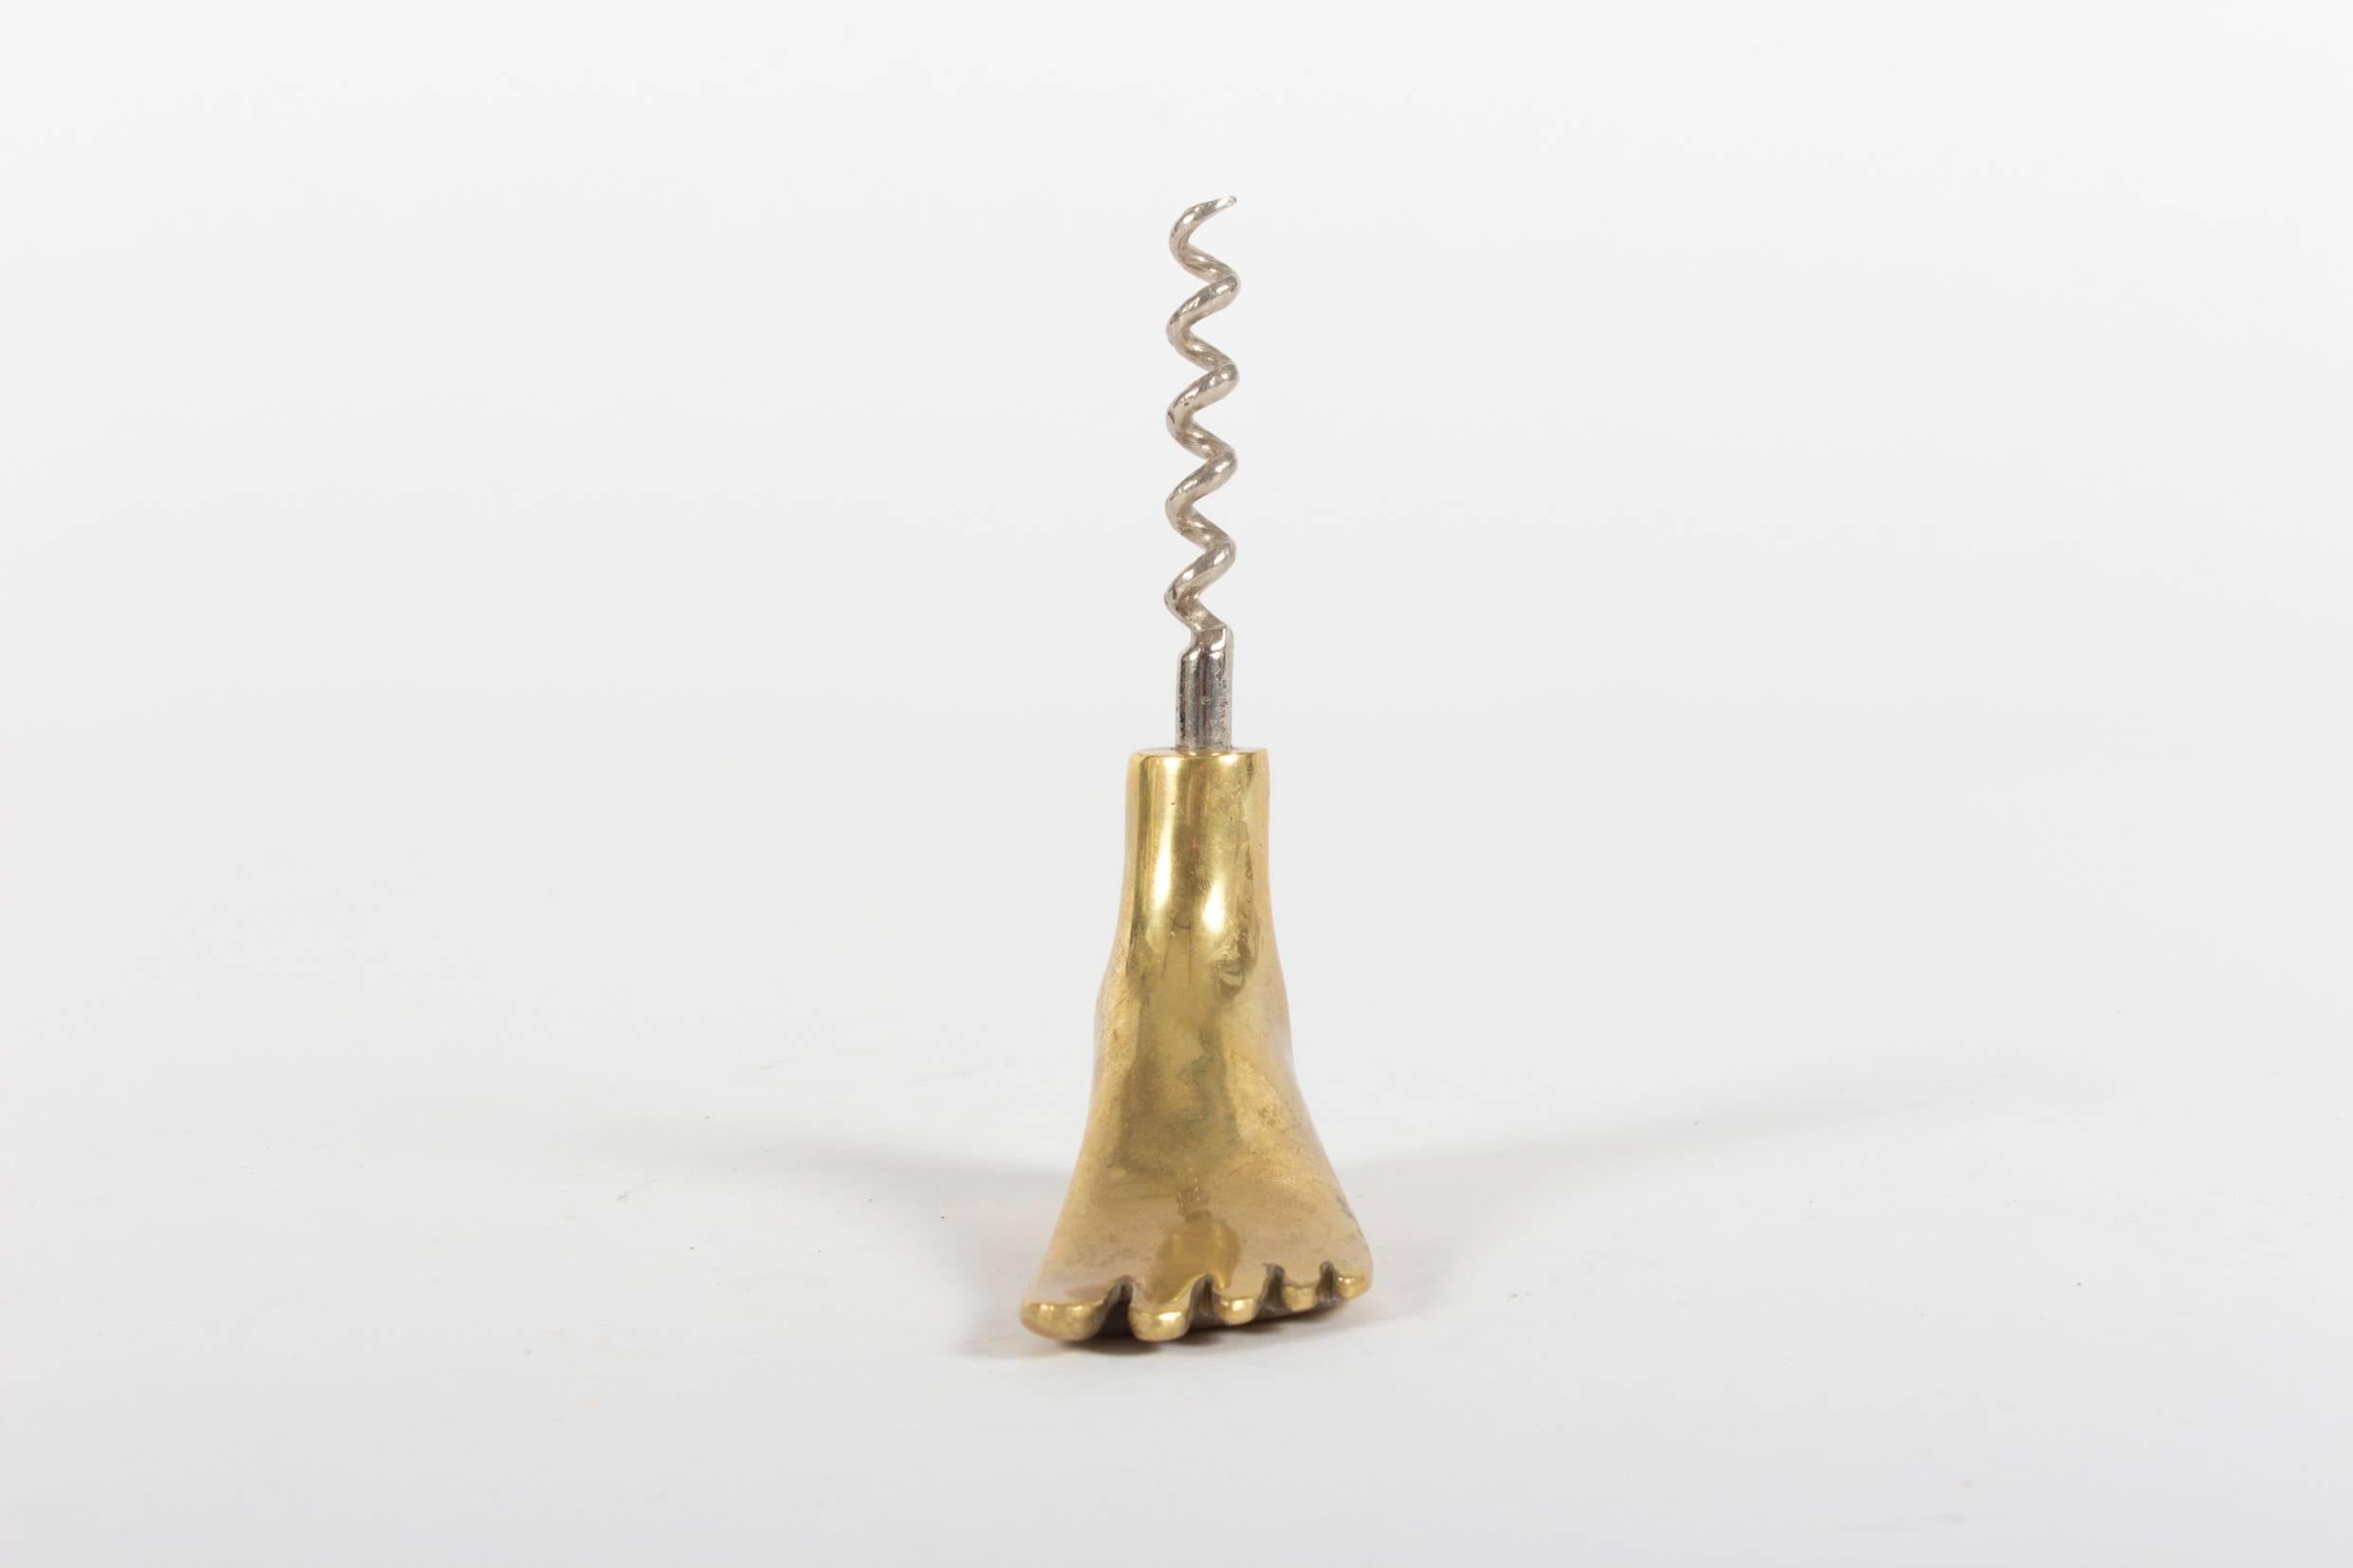 Austrian Midcentury Decorative Brass Corkscrew in Shape of a Foot by Carl Auböck, 1950s For Sale